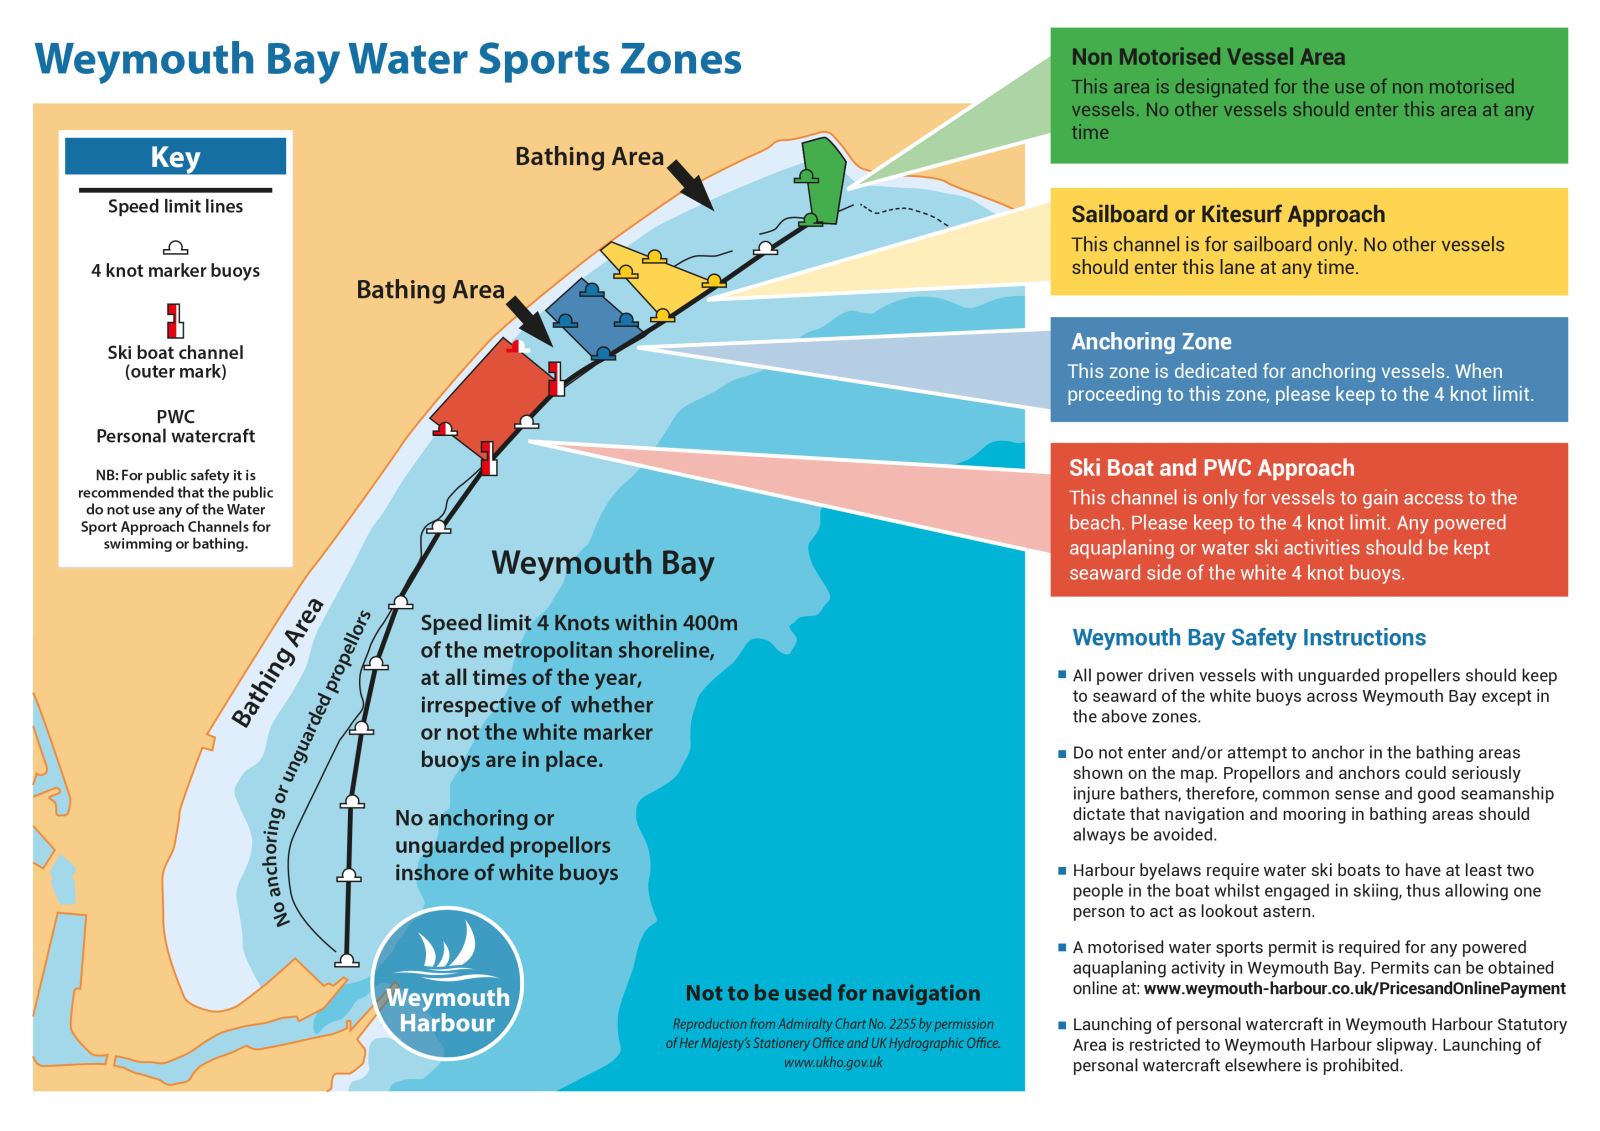 New Weymouth Bay Water Sports Zones